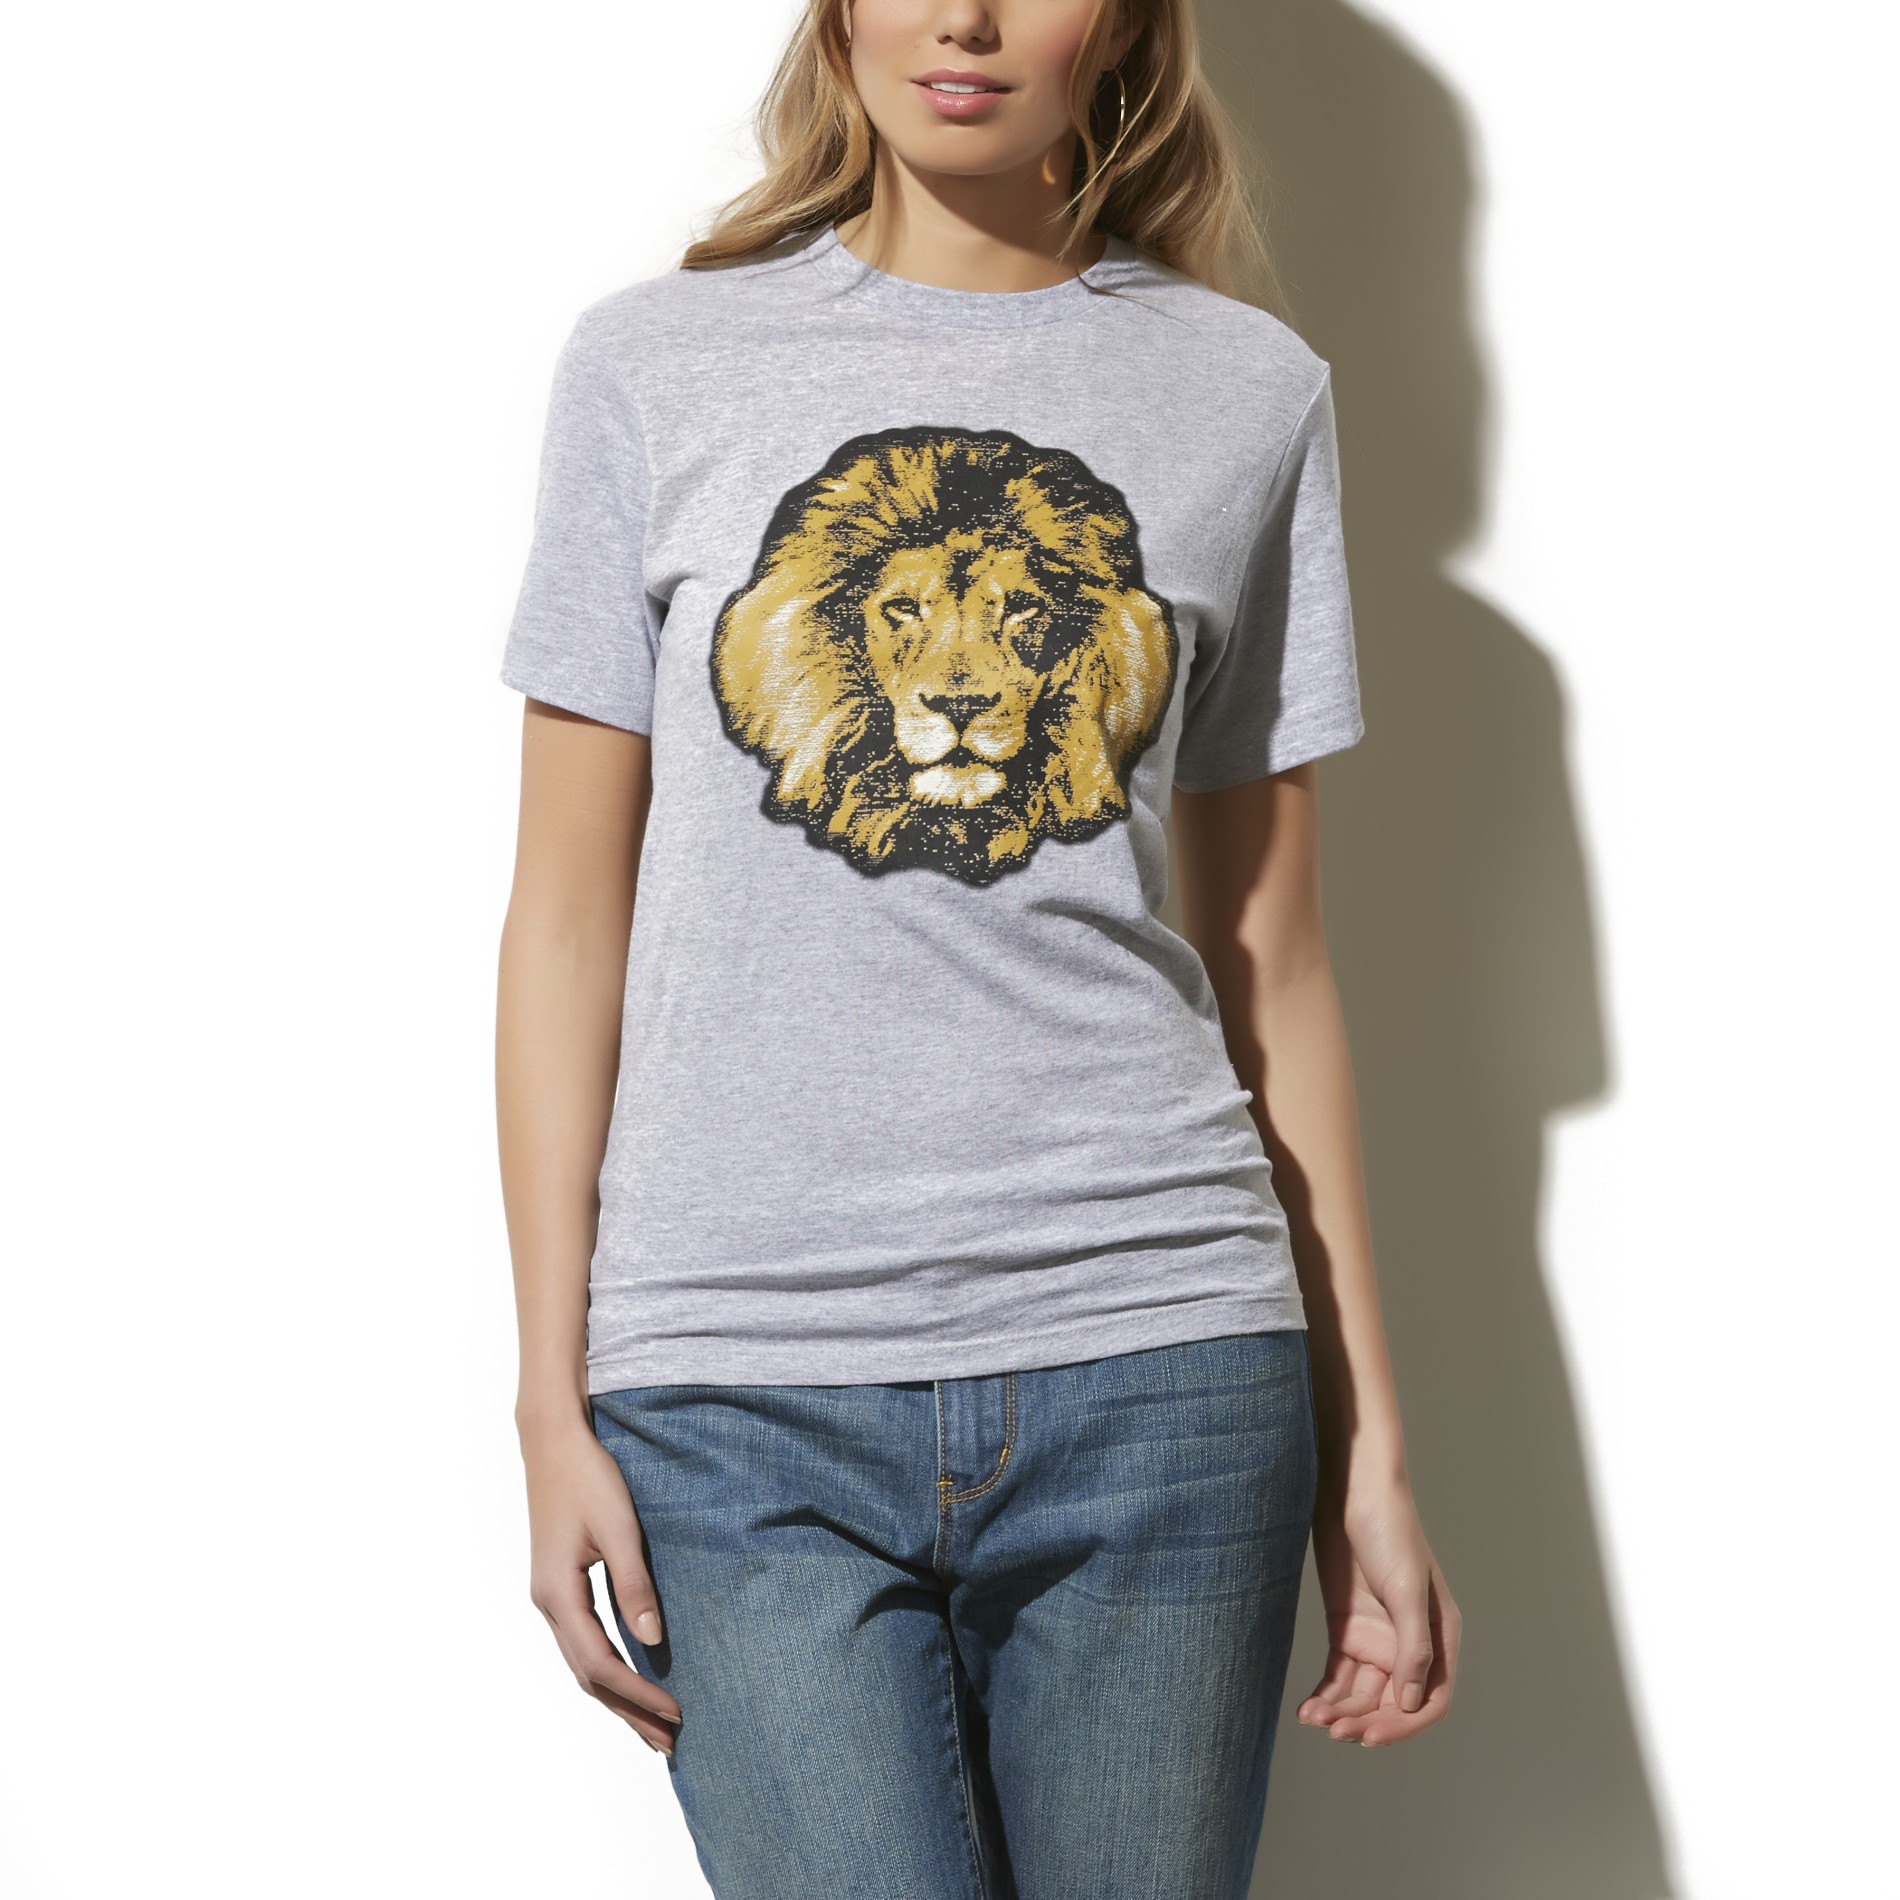 Adam Levine Women's Graphic T-Shirt - Lion